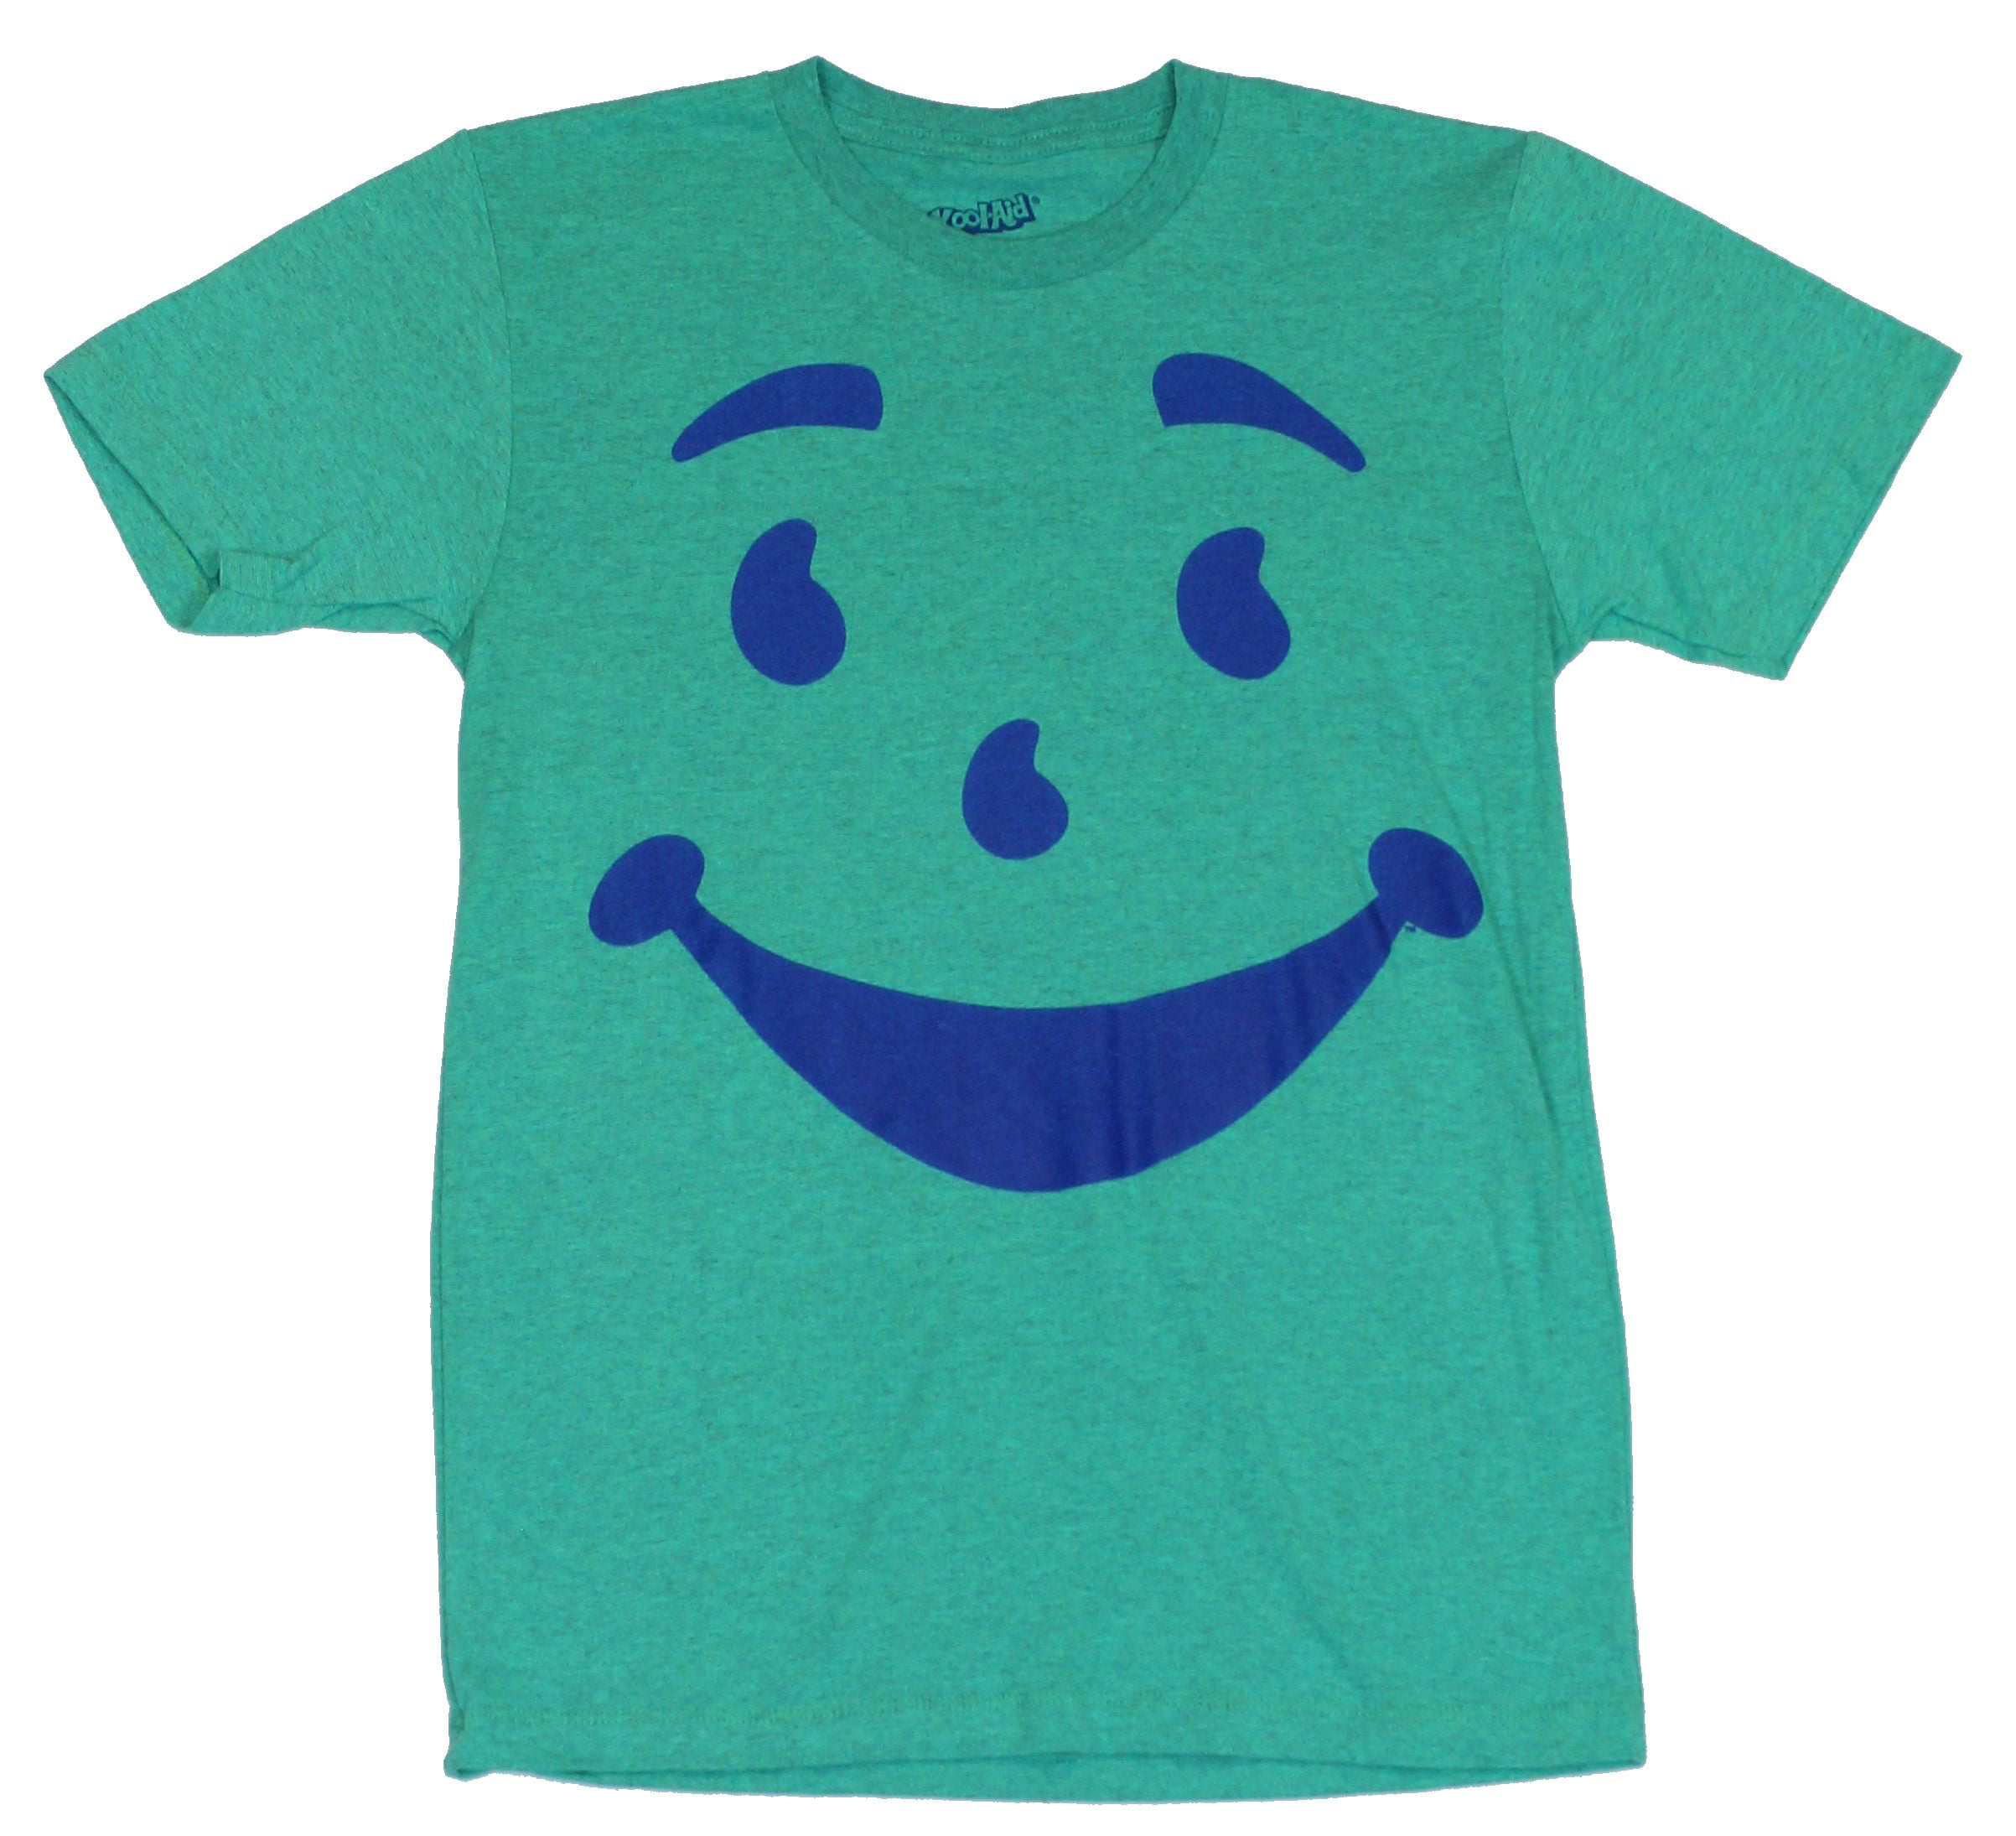 Kool-Aid - Kool-Aid Mens T-Shirt - Classic Smiling Blue Kool Aid Face ...
 Kool Aid Shirt